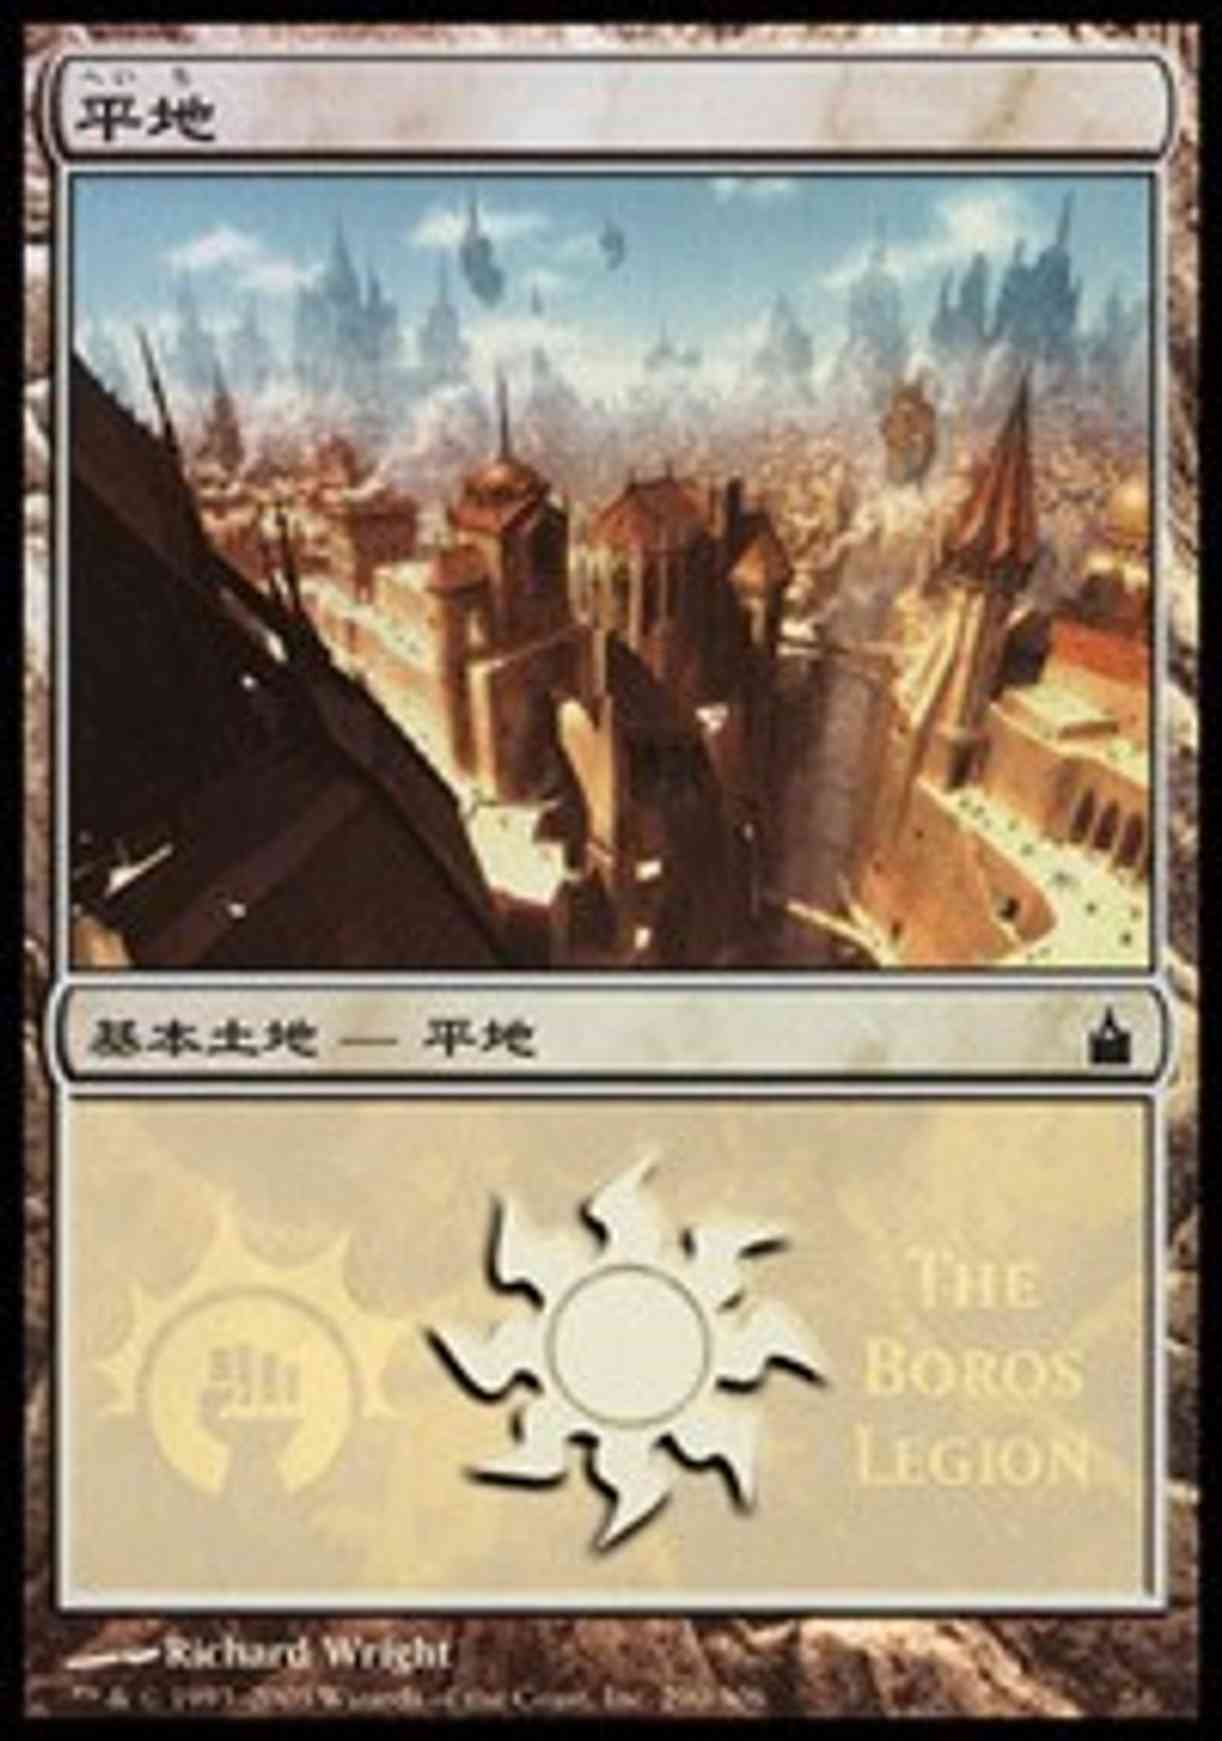 Plains - Boros Legion magic card front